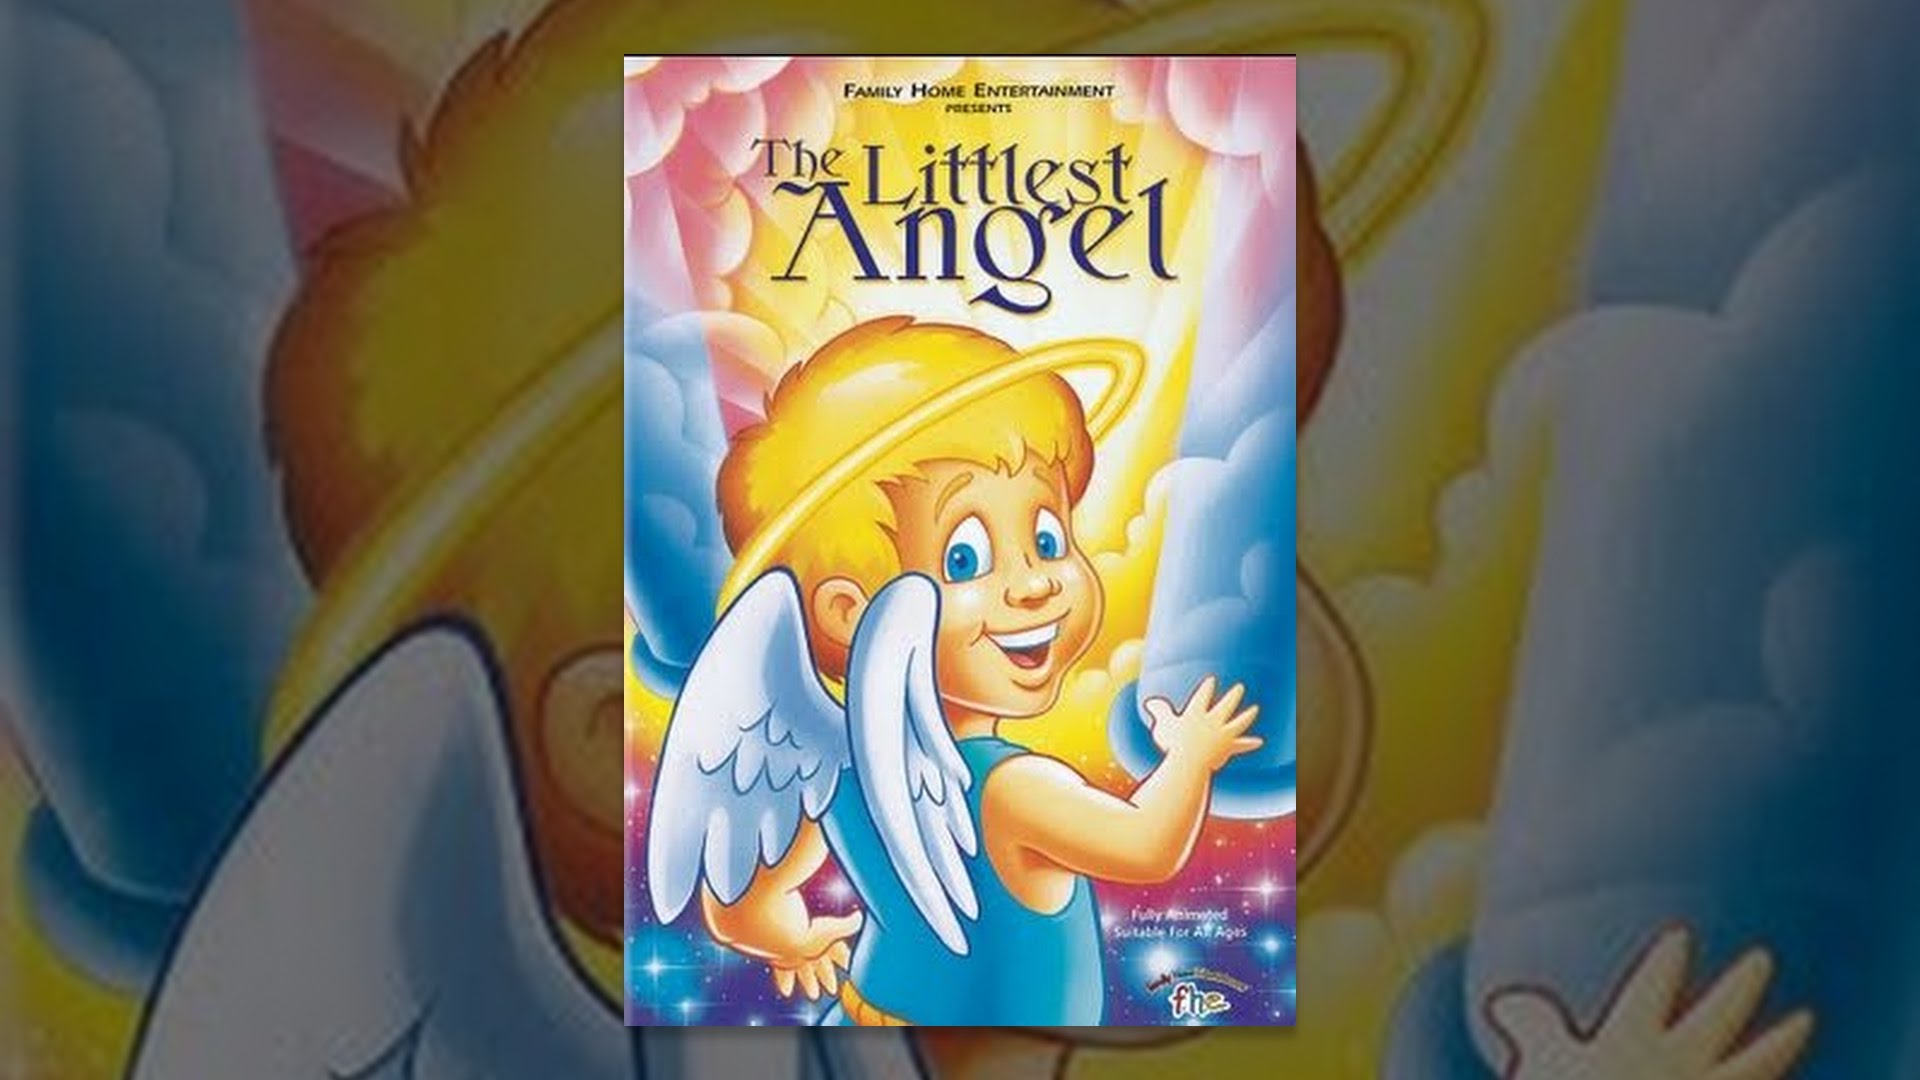 DVD the Littlest Angel 1997. The Littlest Angel 1997 Mario Jose.